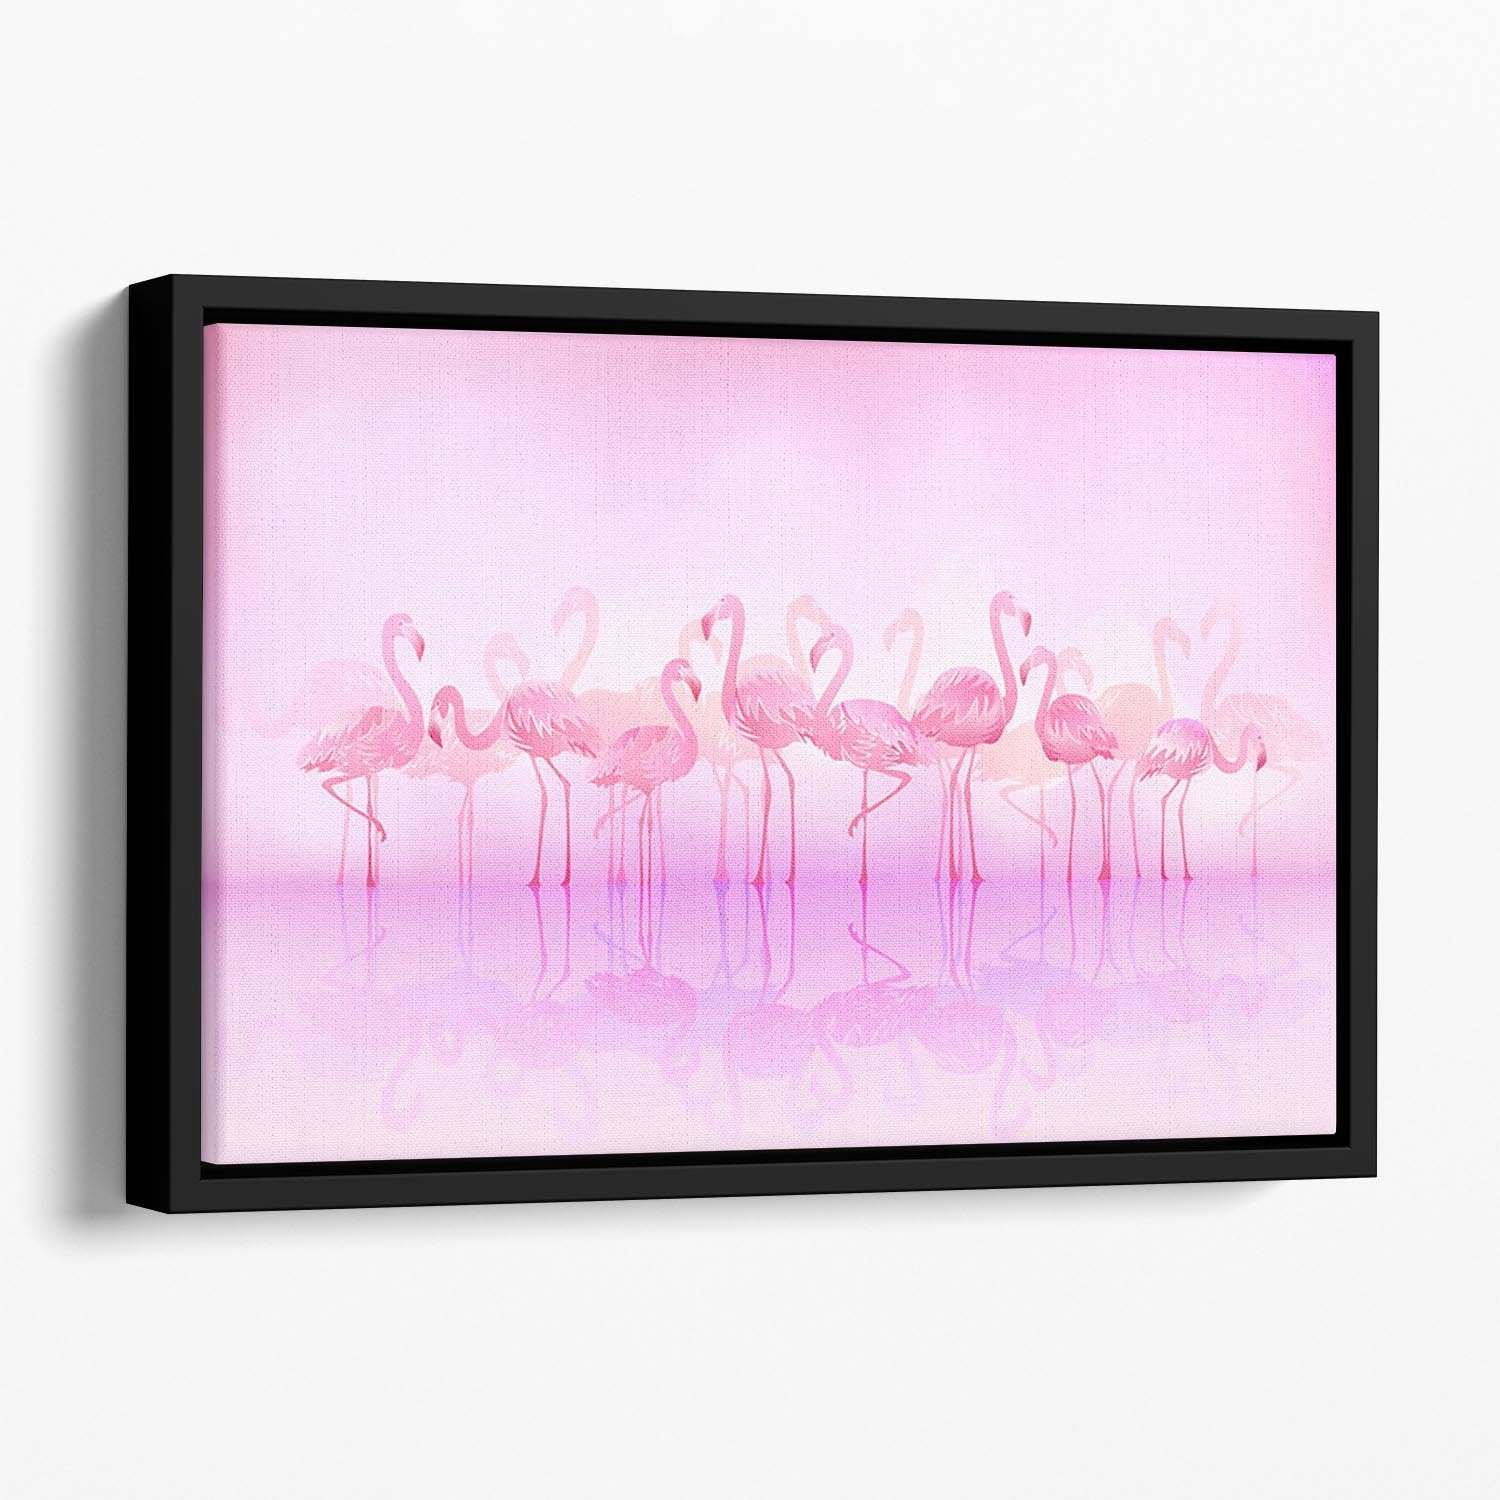 Flock of caribbean flamingos over a lake Floating Framed Canvas - Canvas Art Rocks - 1